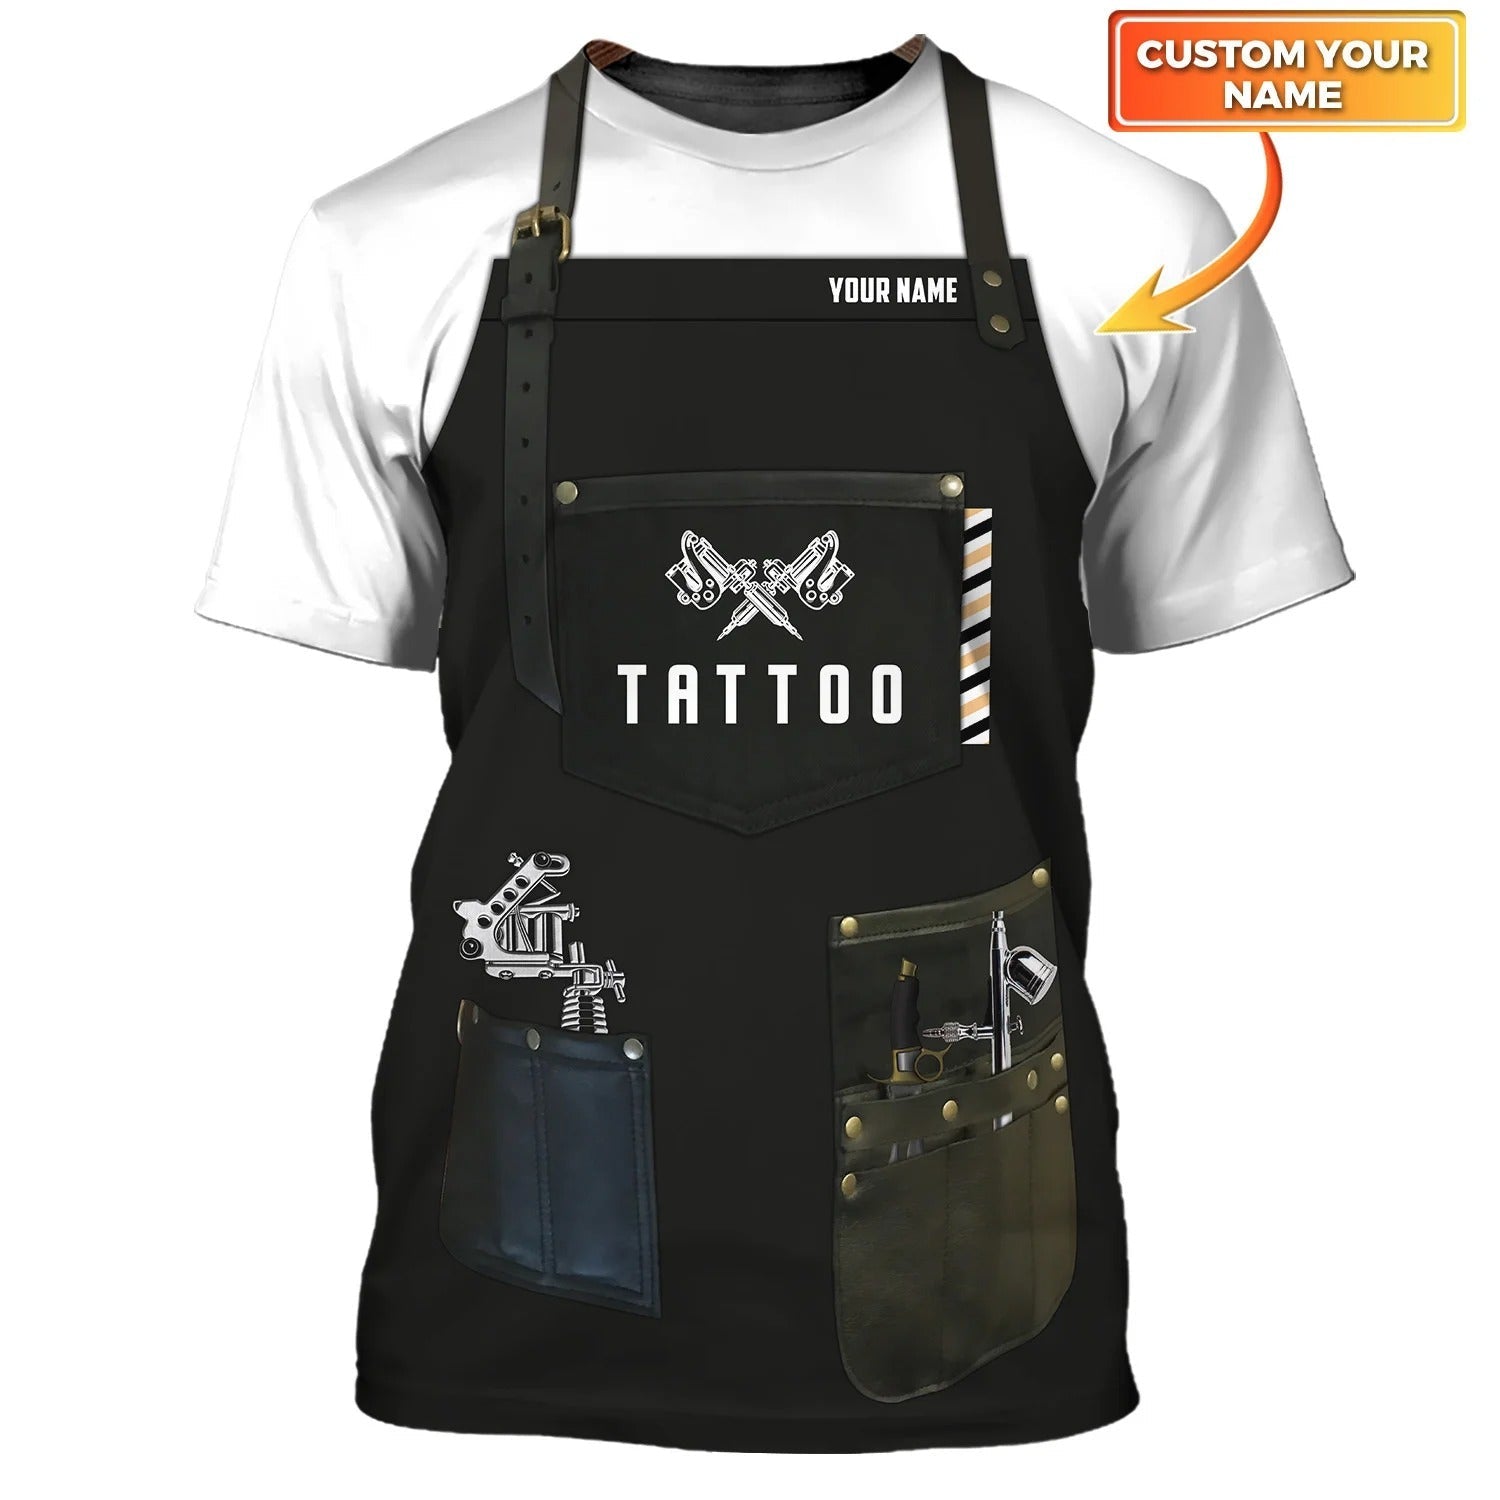 Tattoo Machine Personalized 3D TShirt Classic Tattoo Uniform/ Tattoo Studio Uniform Tattoo Gift For Men